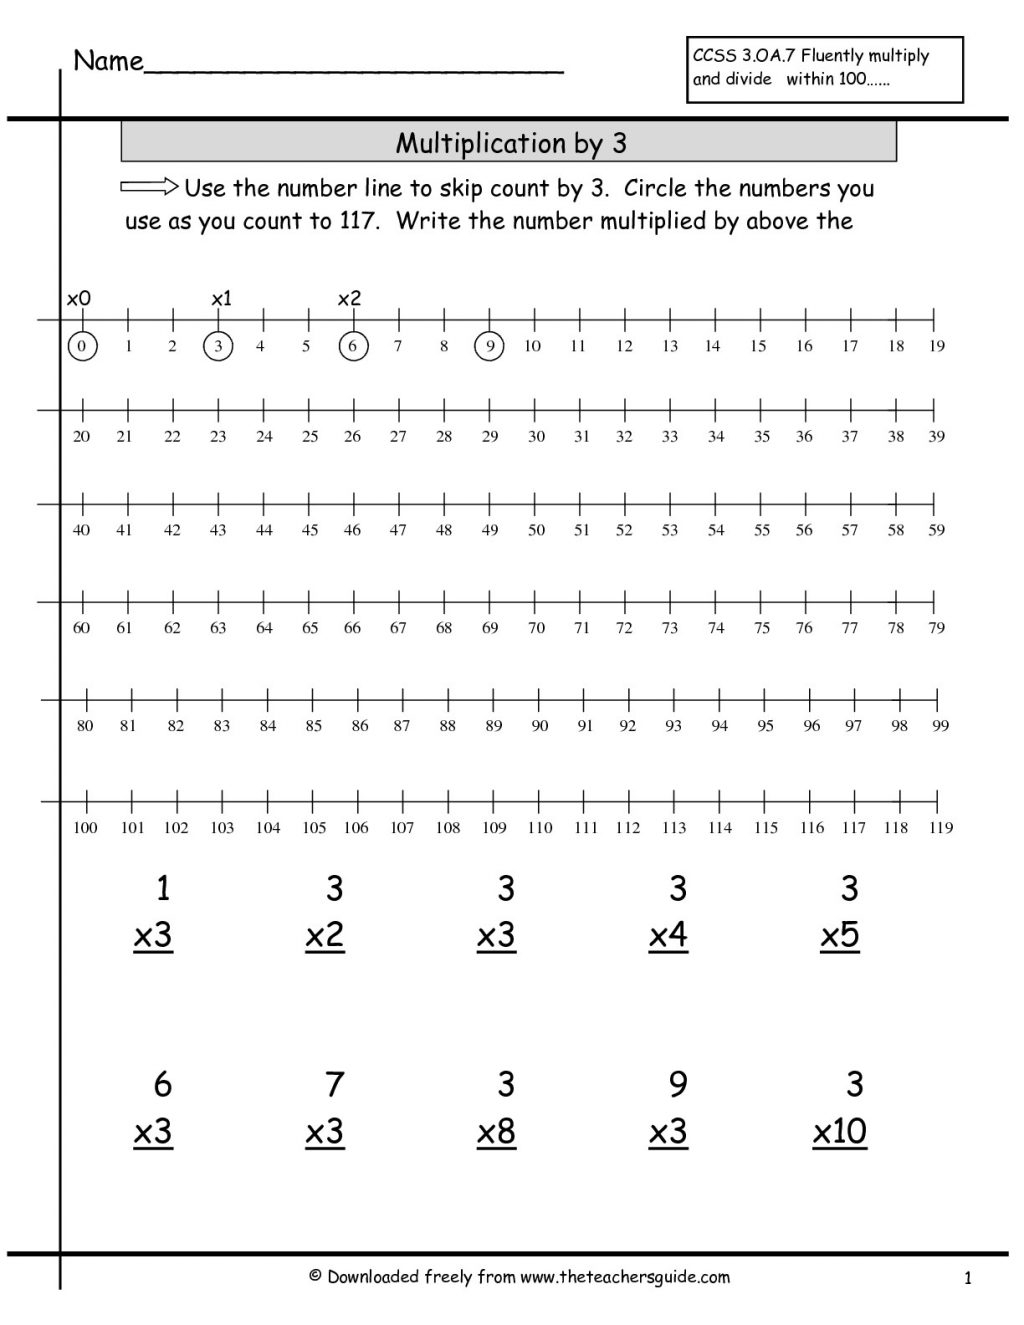  Multiplication Worksheets X2 X3 PrintableMultiplication